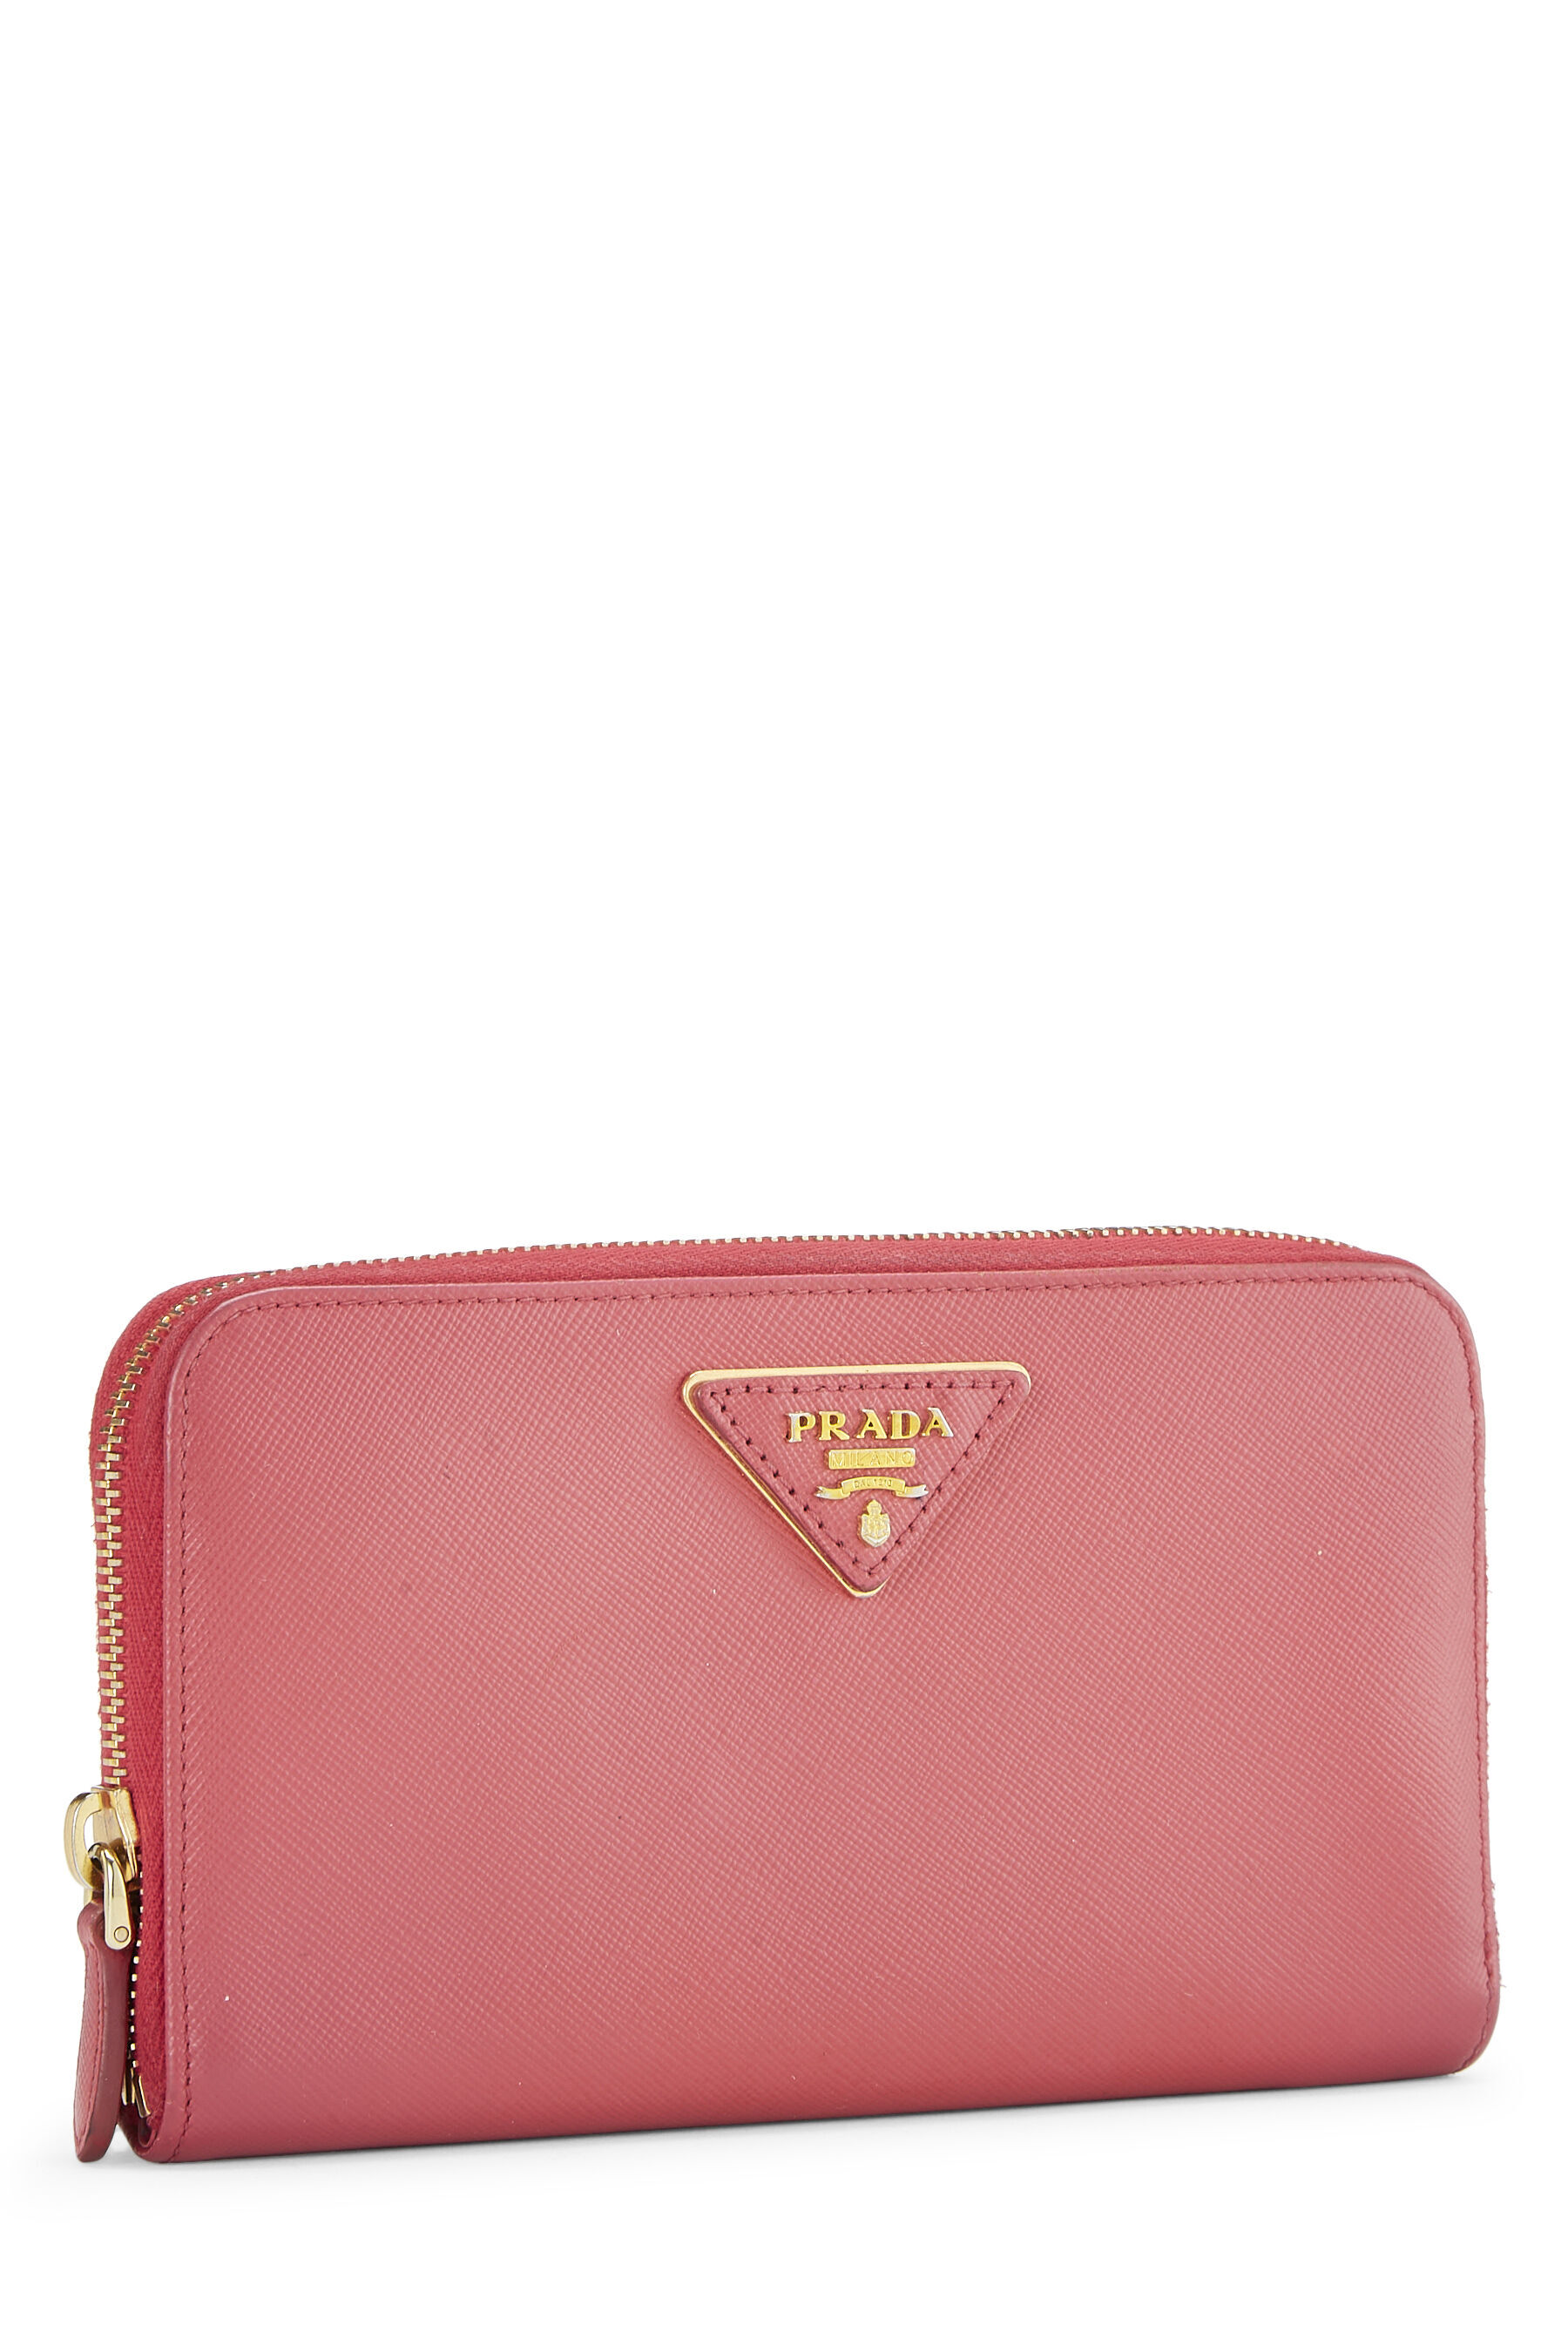 Amazon.com: Prada Women's 1BD163 Pink Leather Shoulder Bag : Amazon Pink